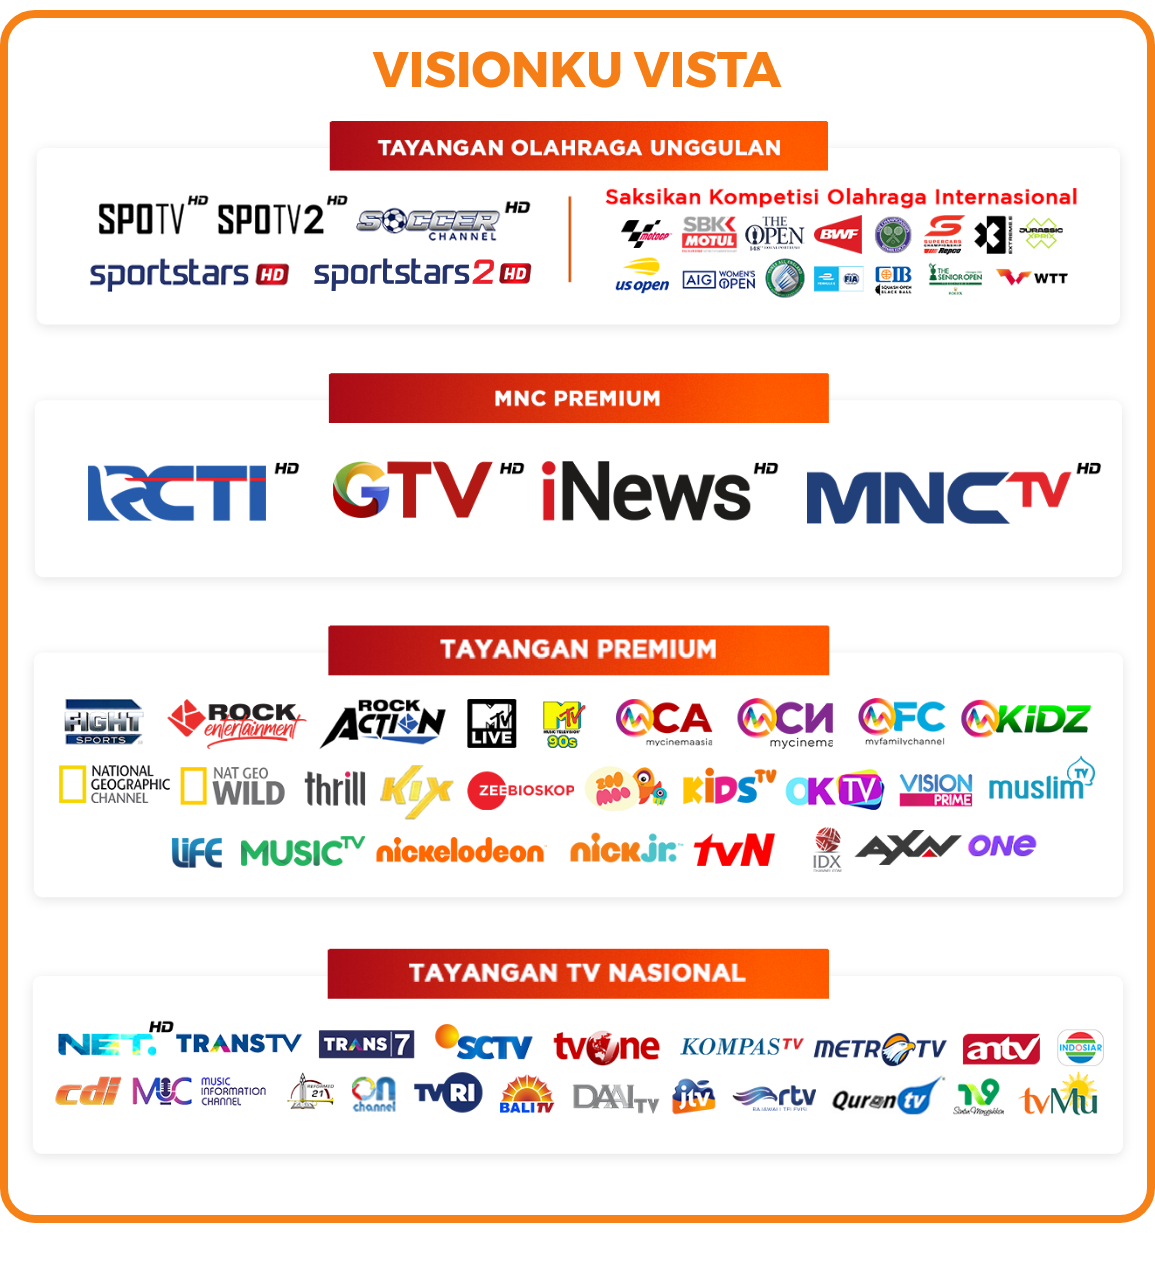 Channel Visionku Vista